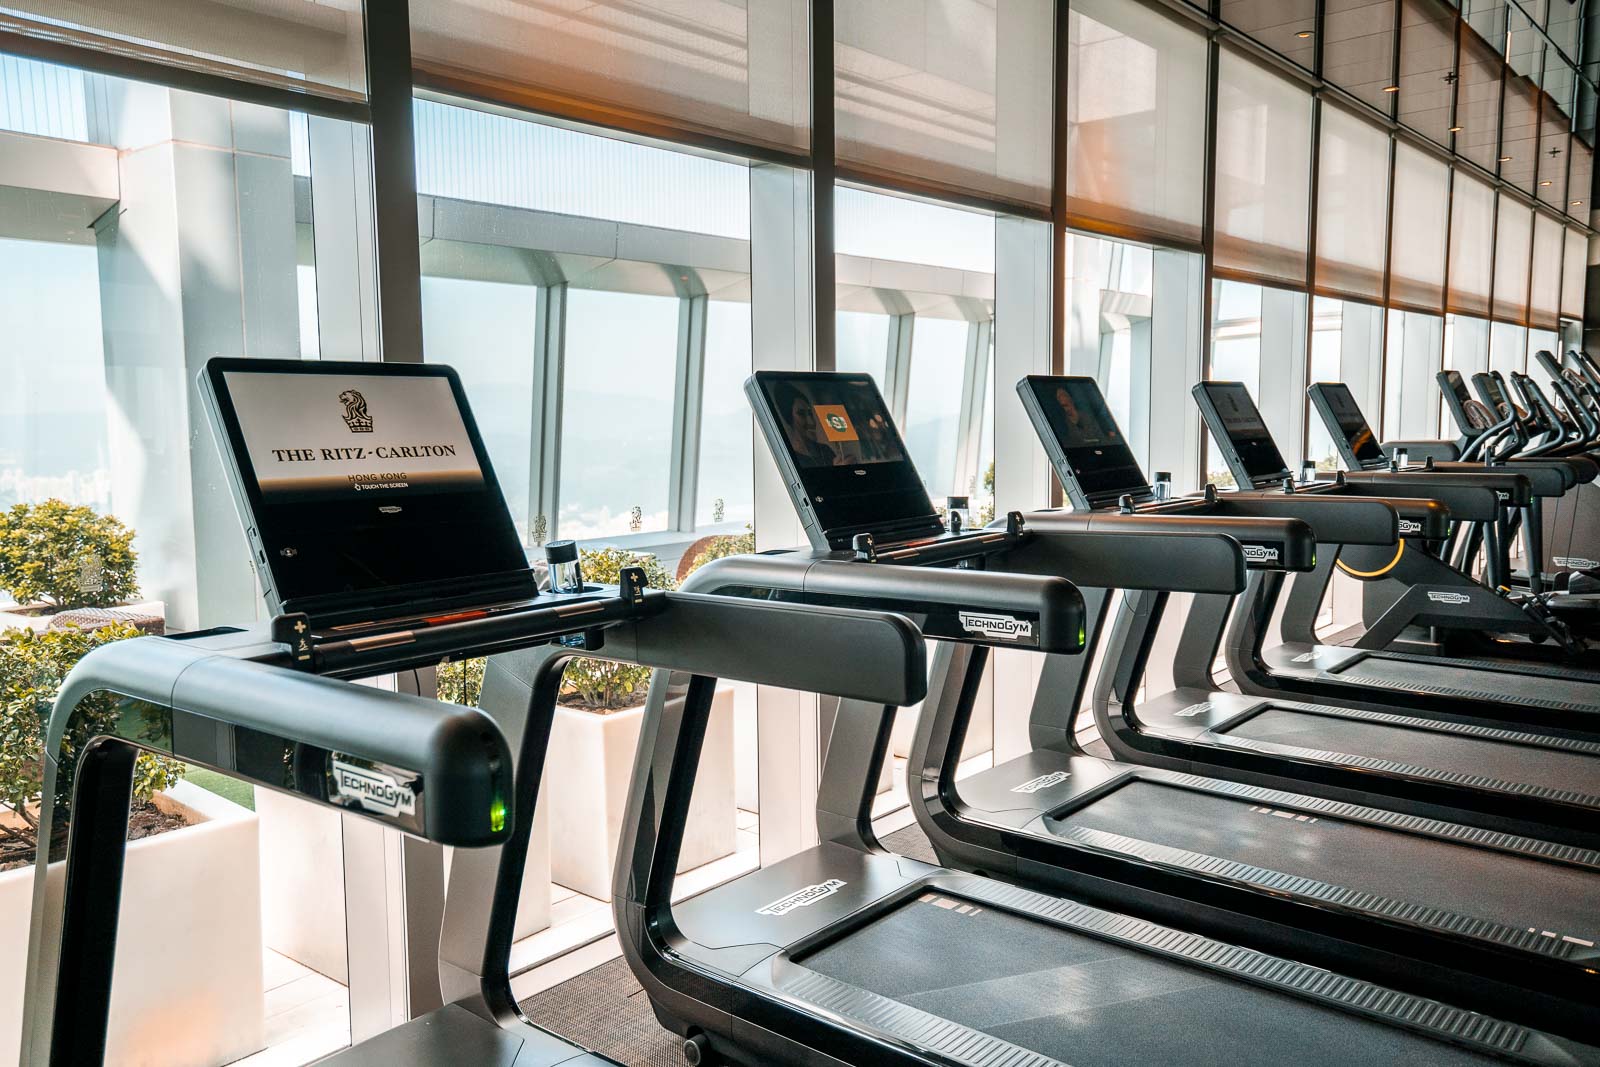 Running treadmills in the gym